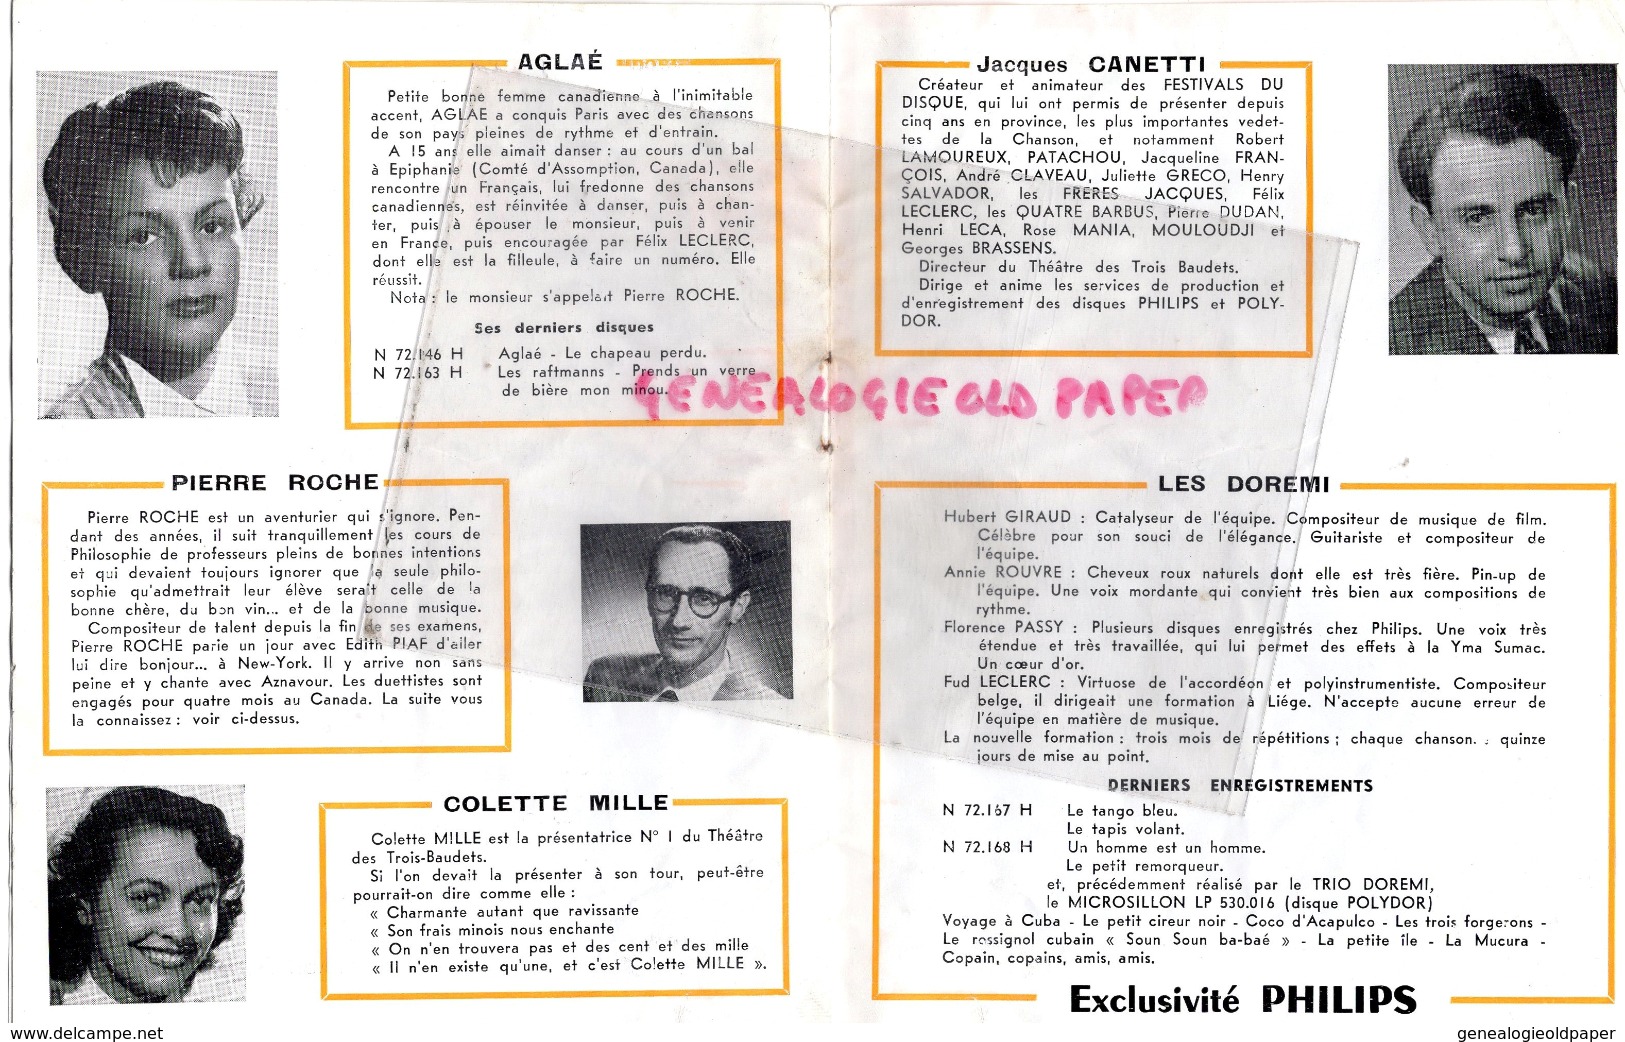 PROGRAMME JACQUES CANETTI- 2EME FESTIVAL DU DISQUE 1953- AGLAE- PIERRE JEAN VAILLARD-MOULOUDJI-DARRY COWL-PIERRE ROCHE- - Programas